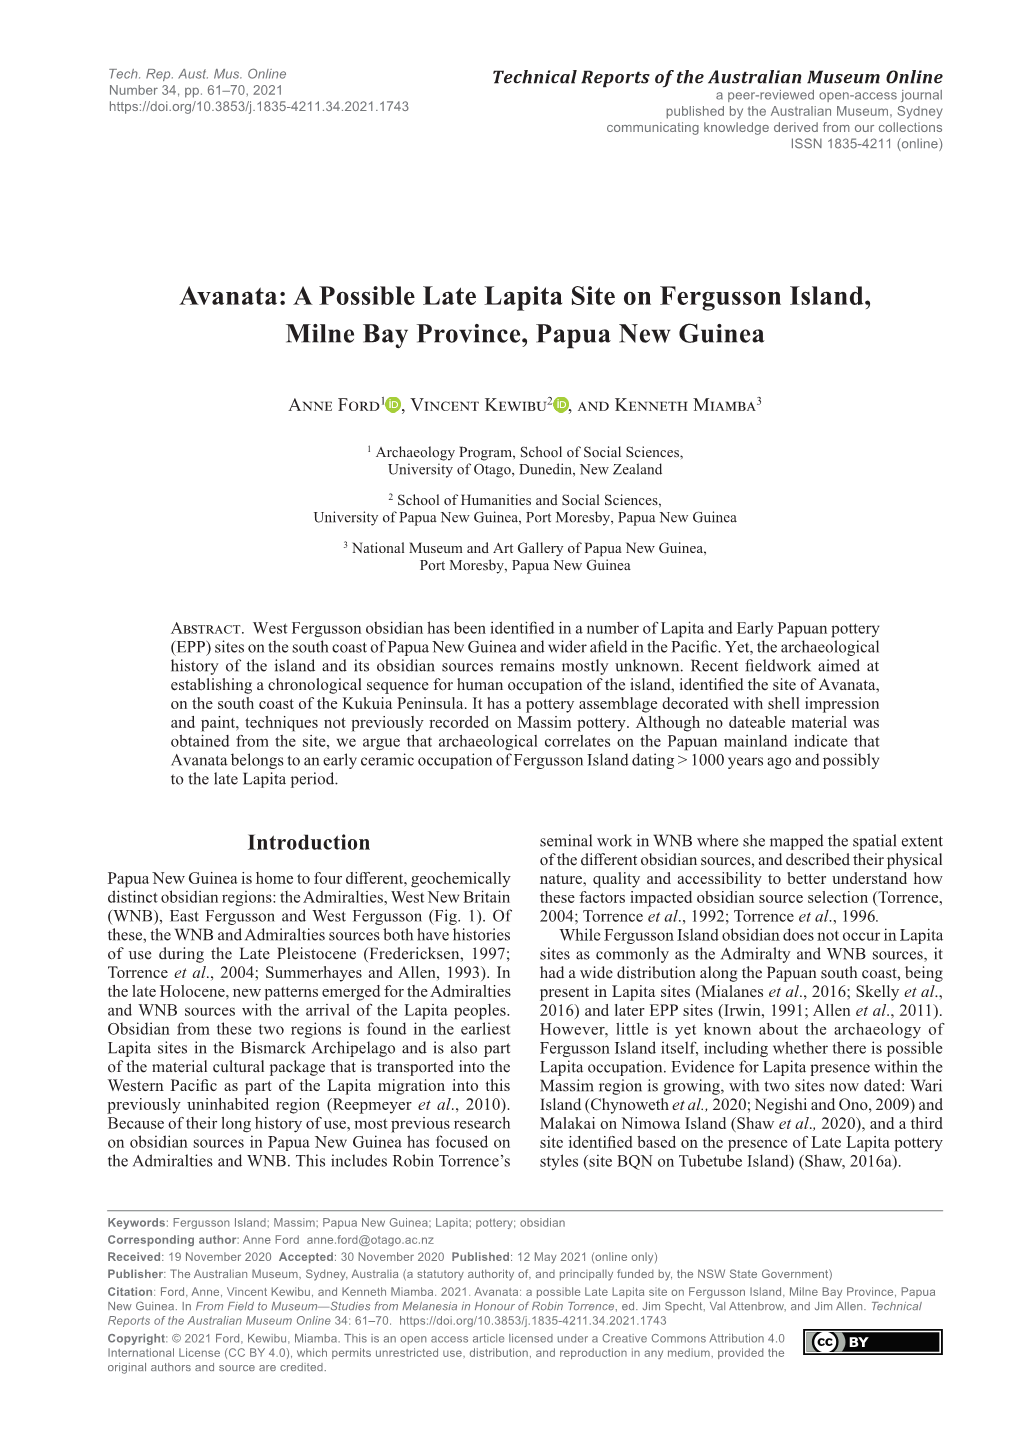 Avanata: a Possible Late Lapita Site on Fergusson Island, Milne Bay Province, Papua New Guinea